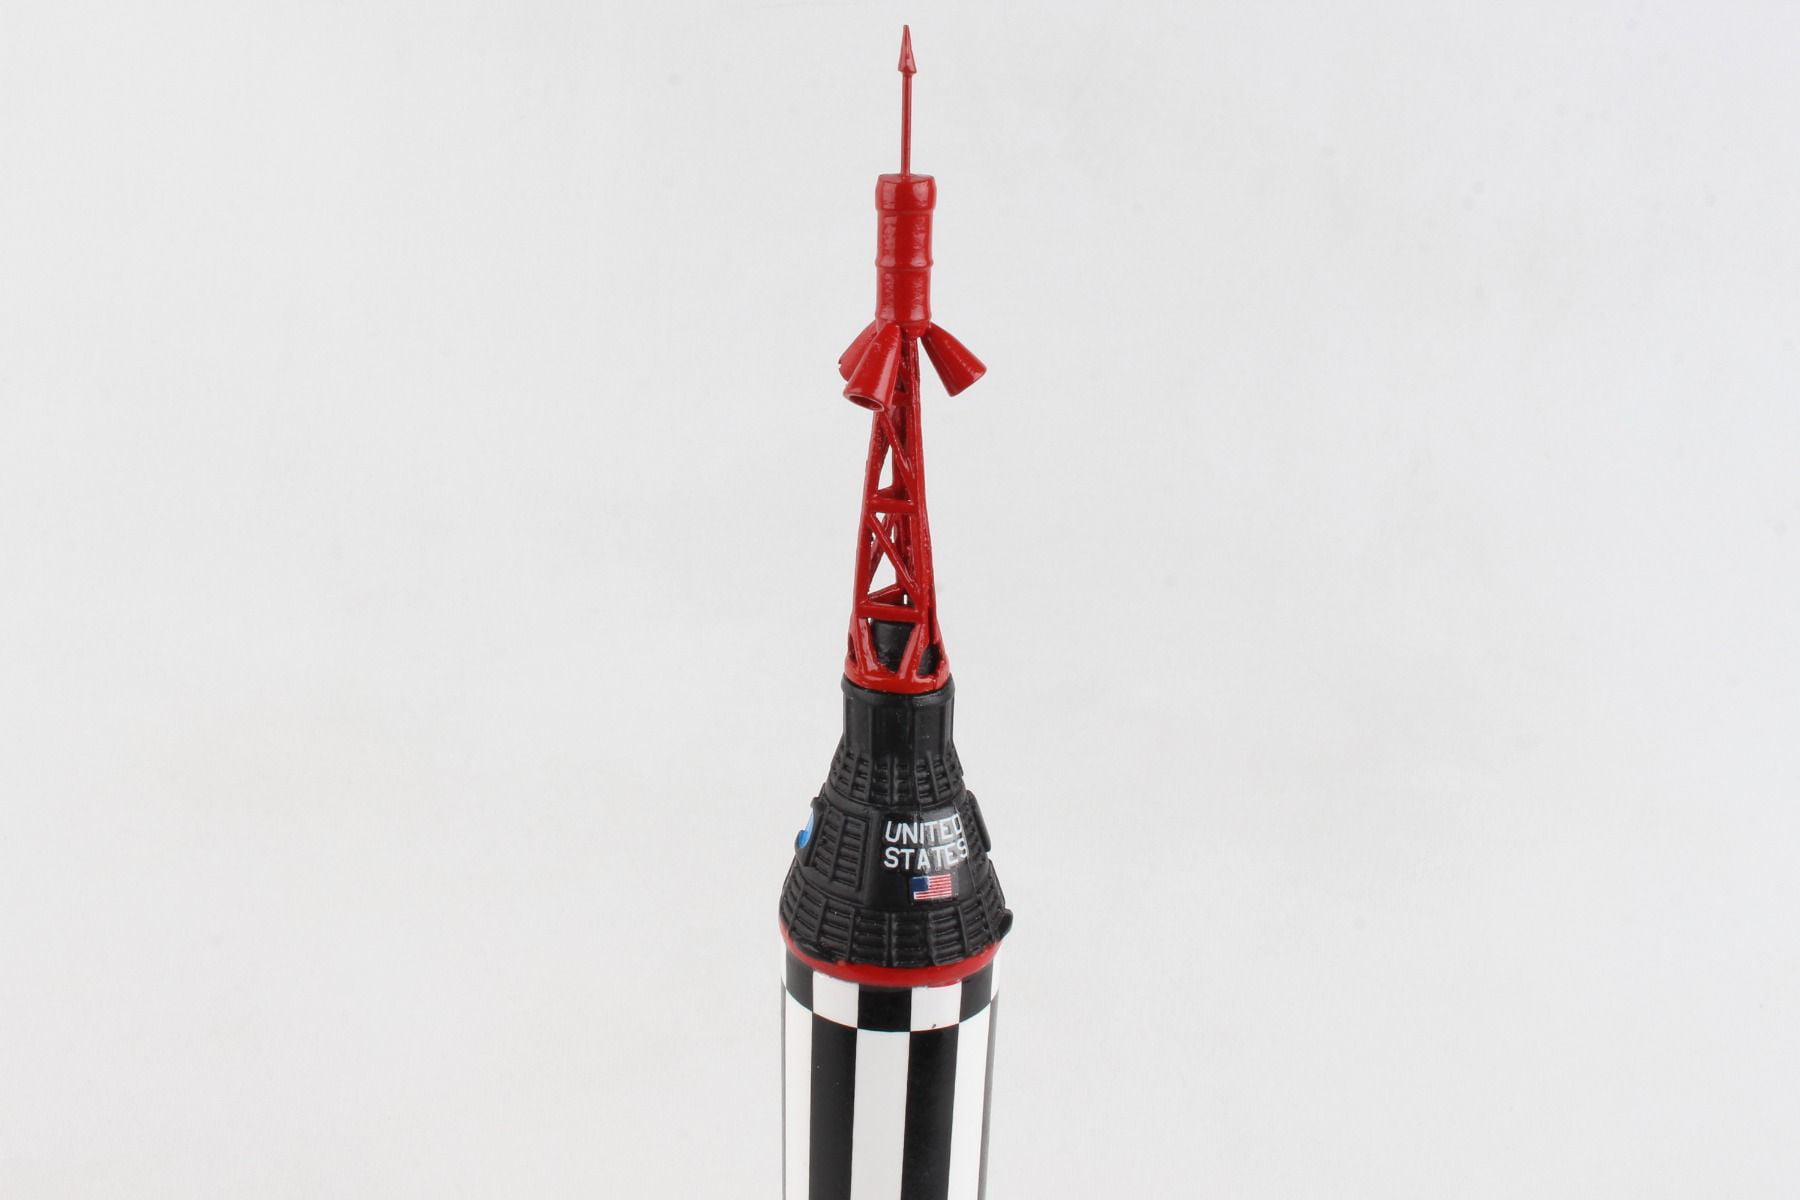 Executive Series Models Mercury Redstone Rocket Model Kit 1/72 Scale 